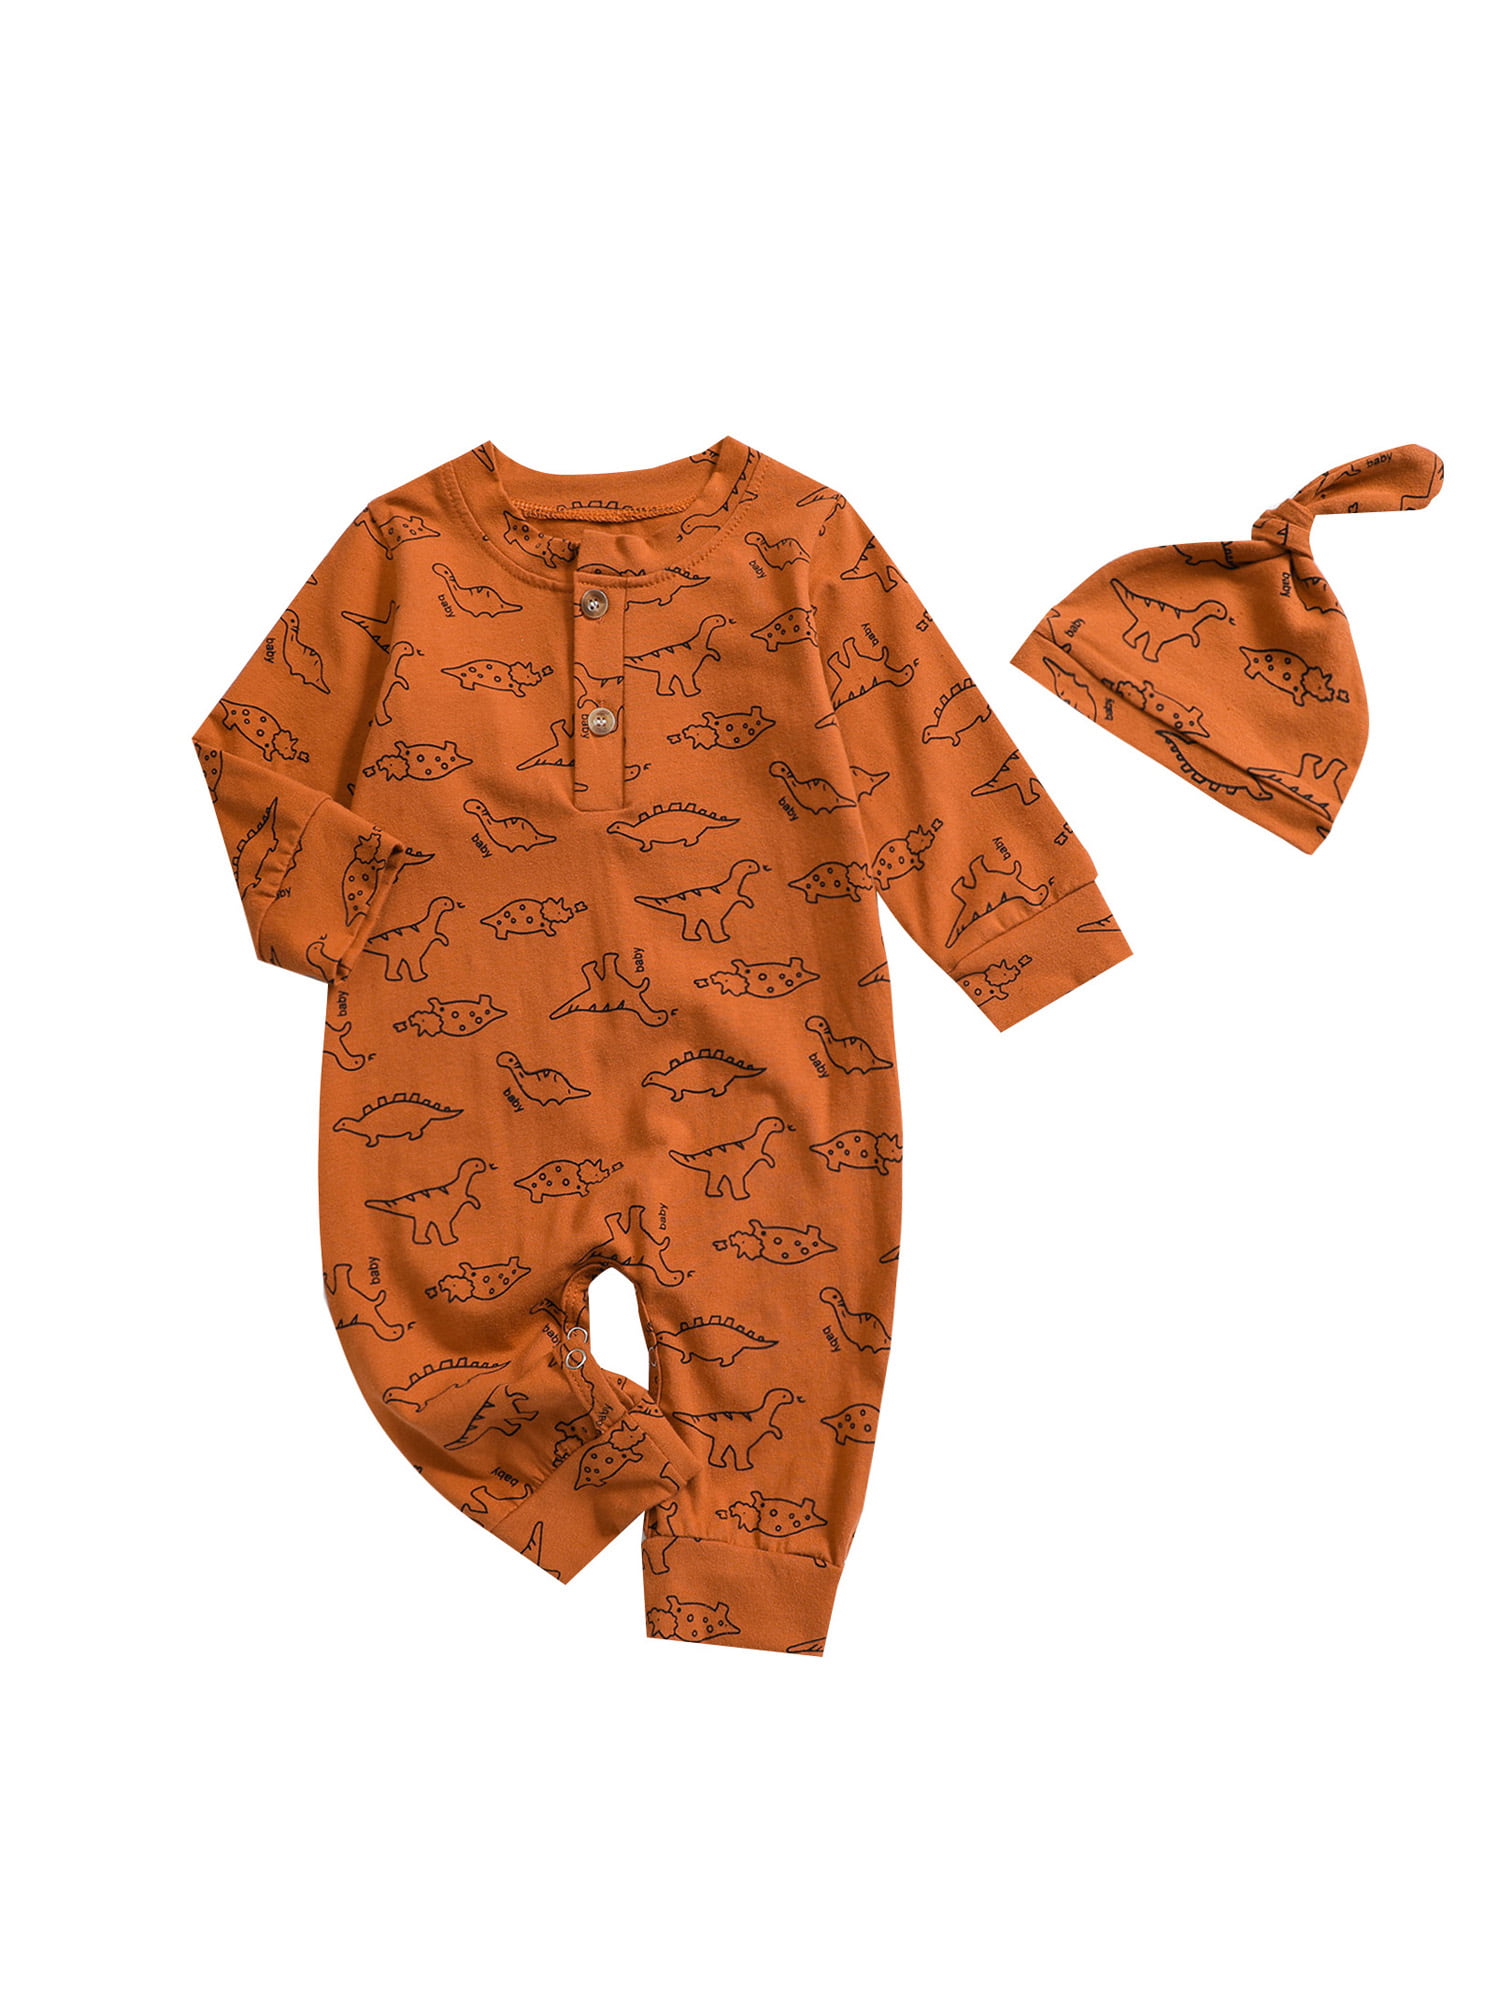 Infant Baby Boys Girls Otter Fun Long Sleeve Romper Bodysuit Jumpsuit Top+Trousers+Hat 0-24M 